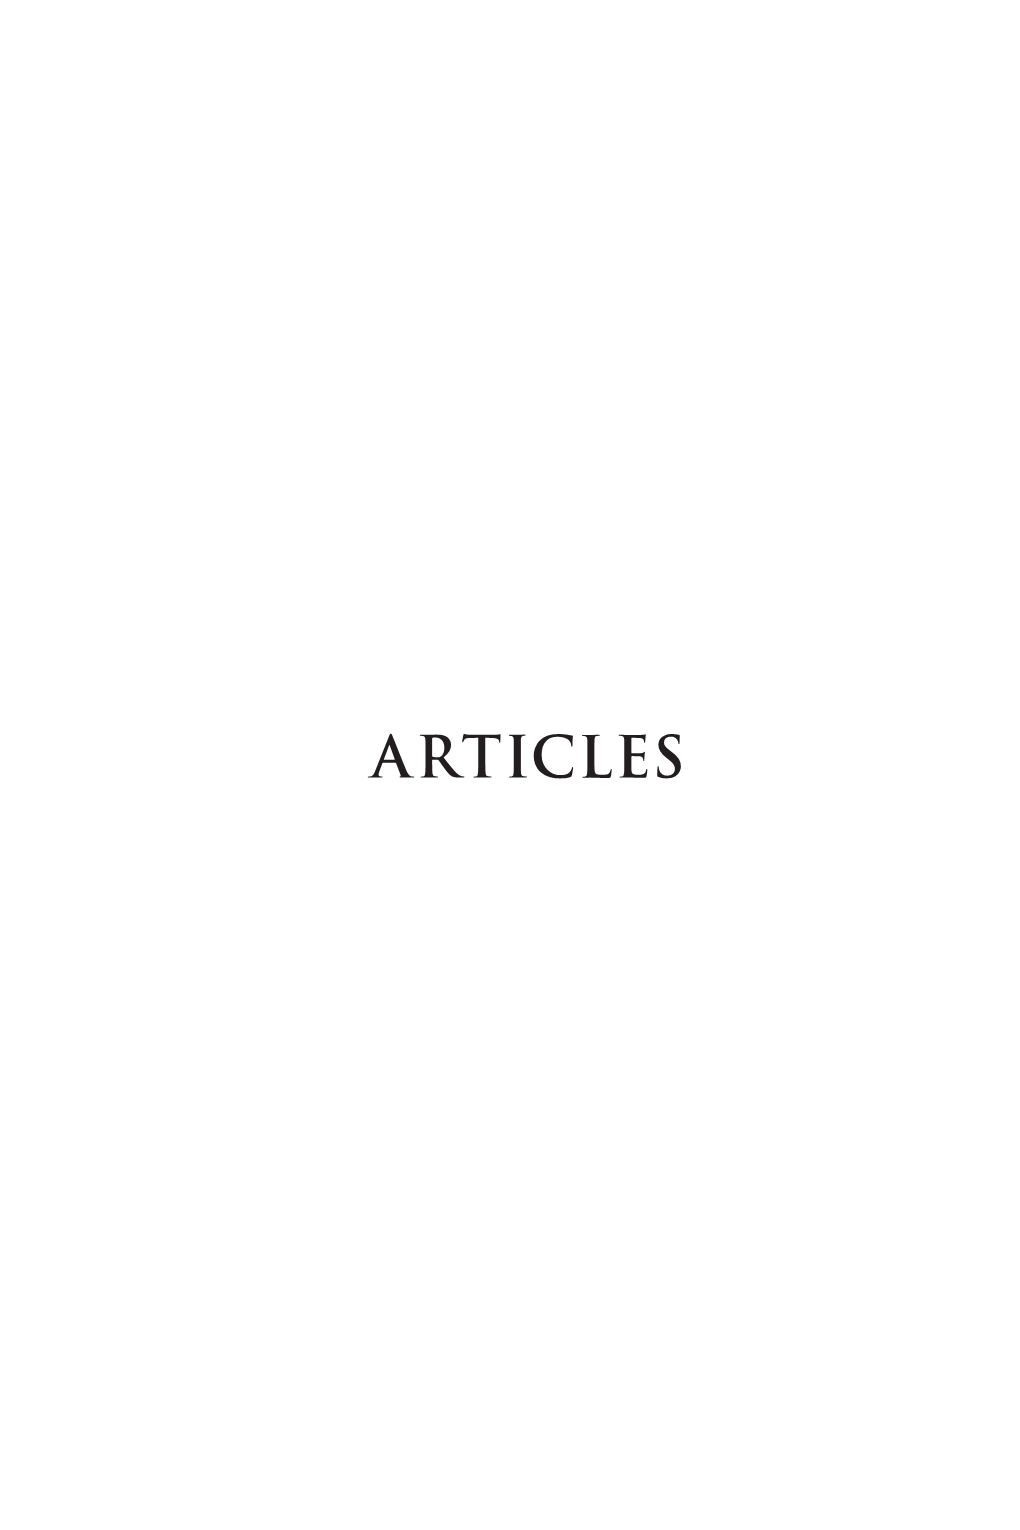 Articles  195